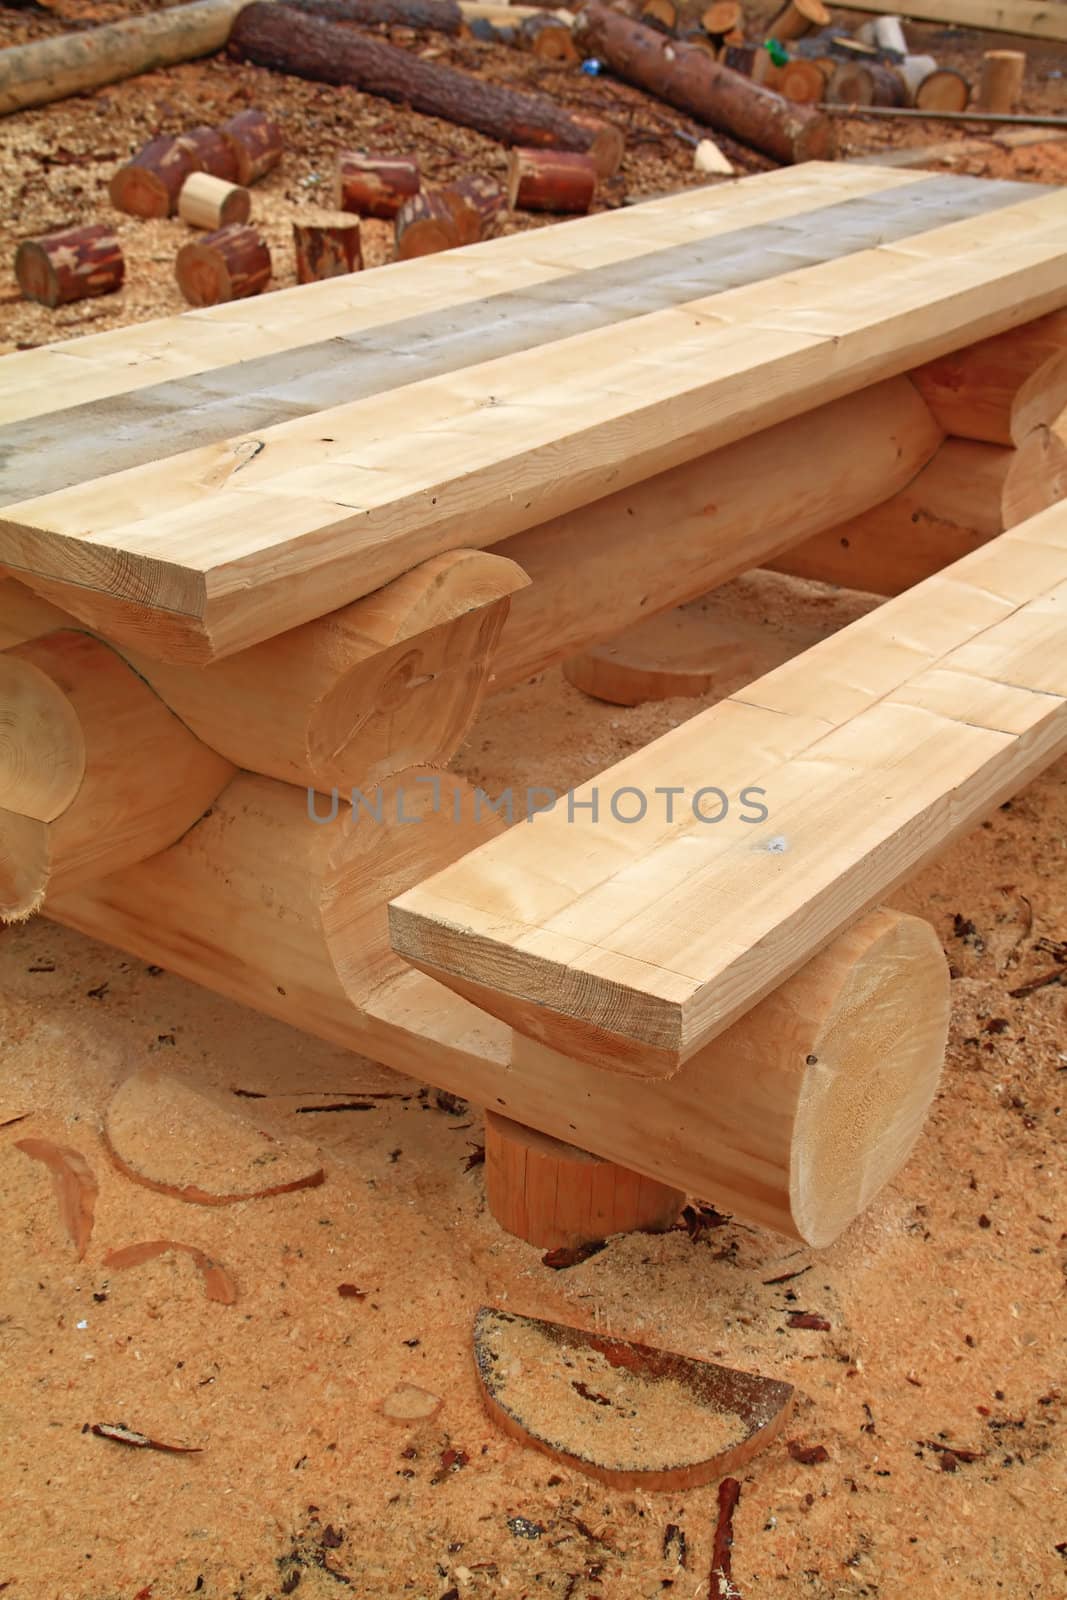 wooden bench amongst yellow sawdust